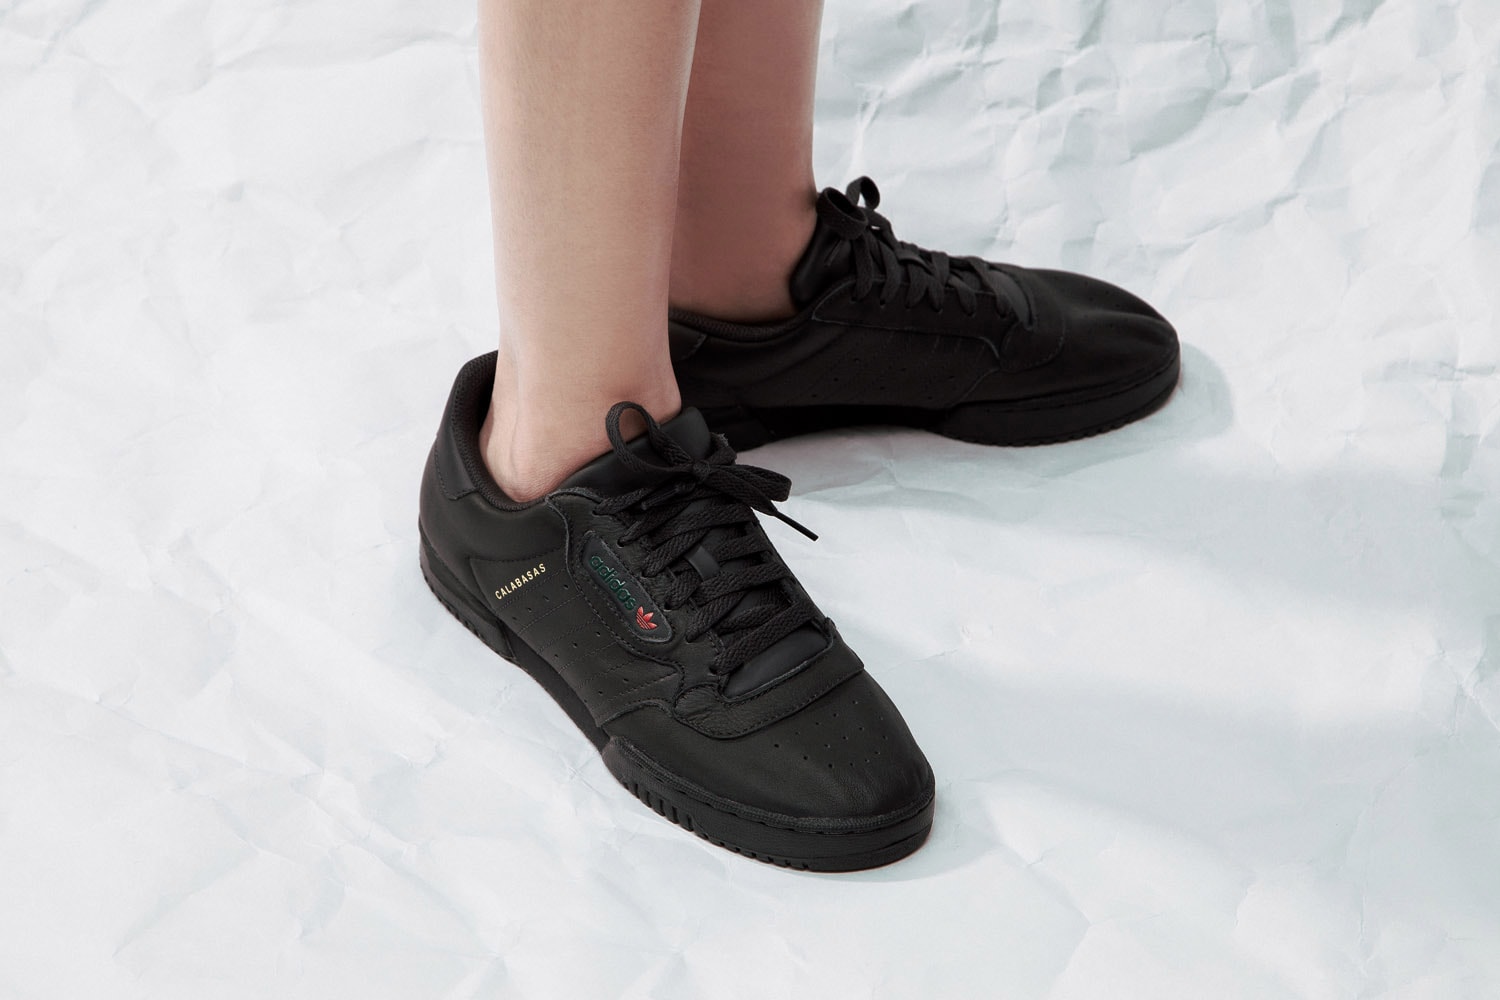 YEEZY Powerphase Core Black Calabasas Kanye West adidas Originals sneaker mens womens unisex where to buy raffle enter HBX